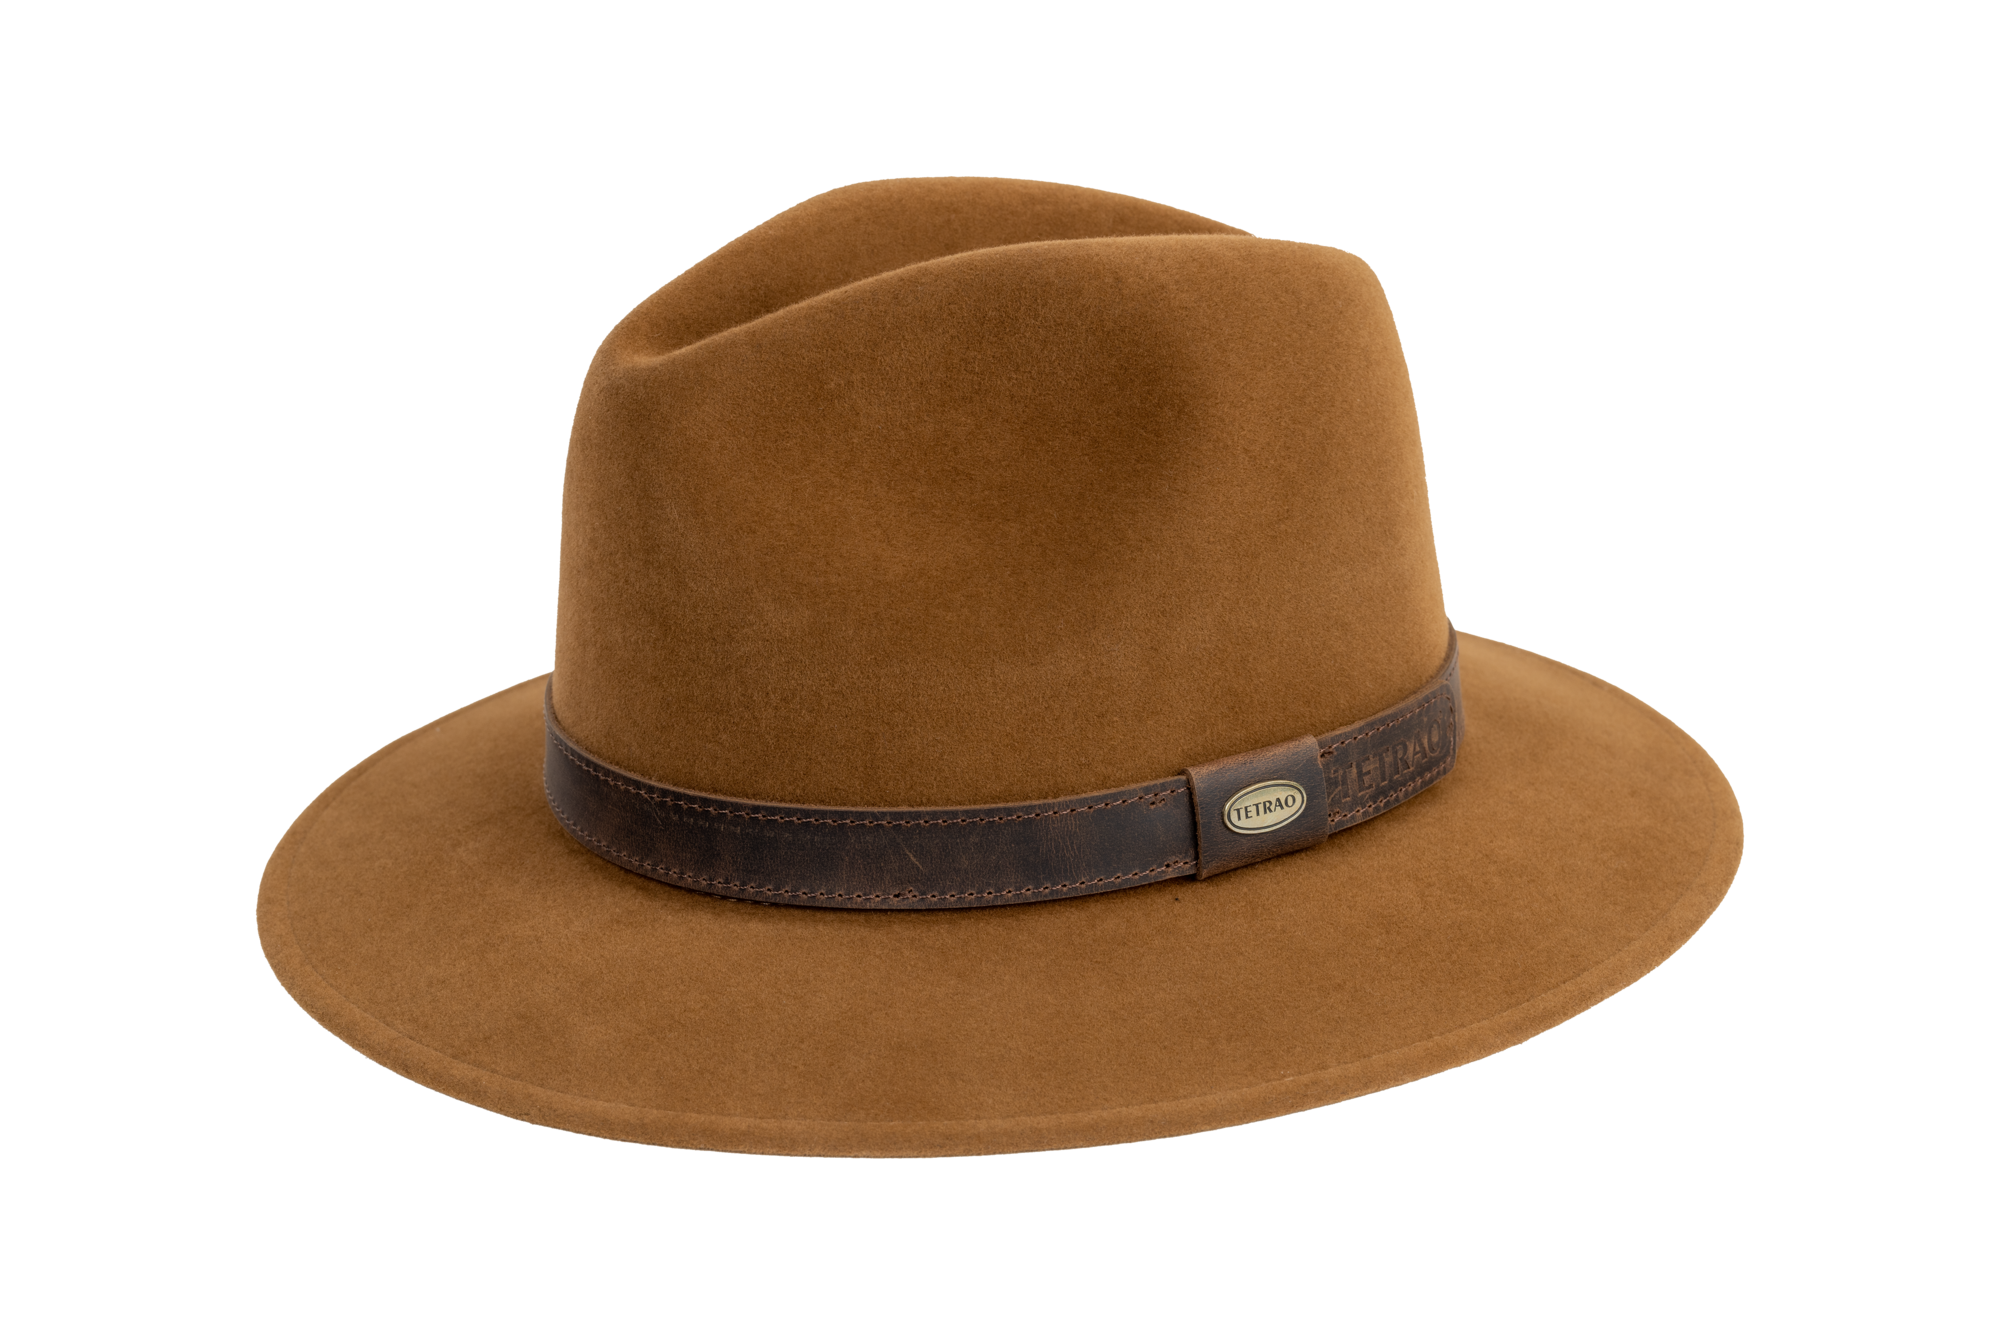 Poľovnícky klobúk TETRAO Exclusive zajac - hnedý  59